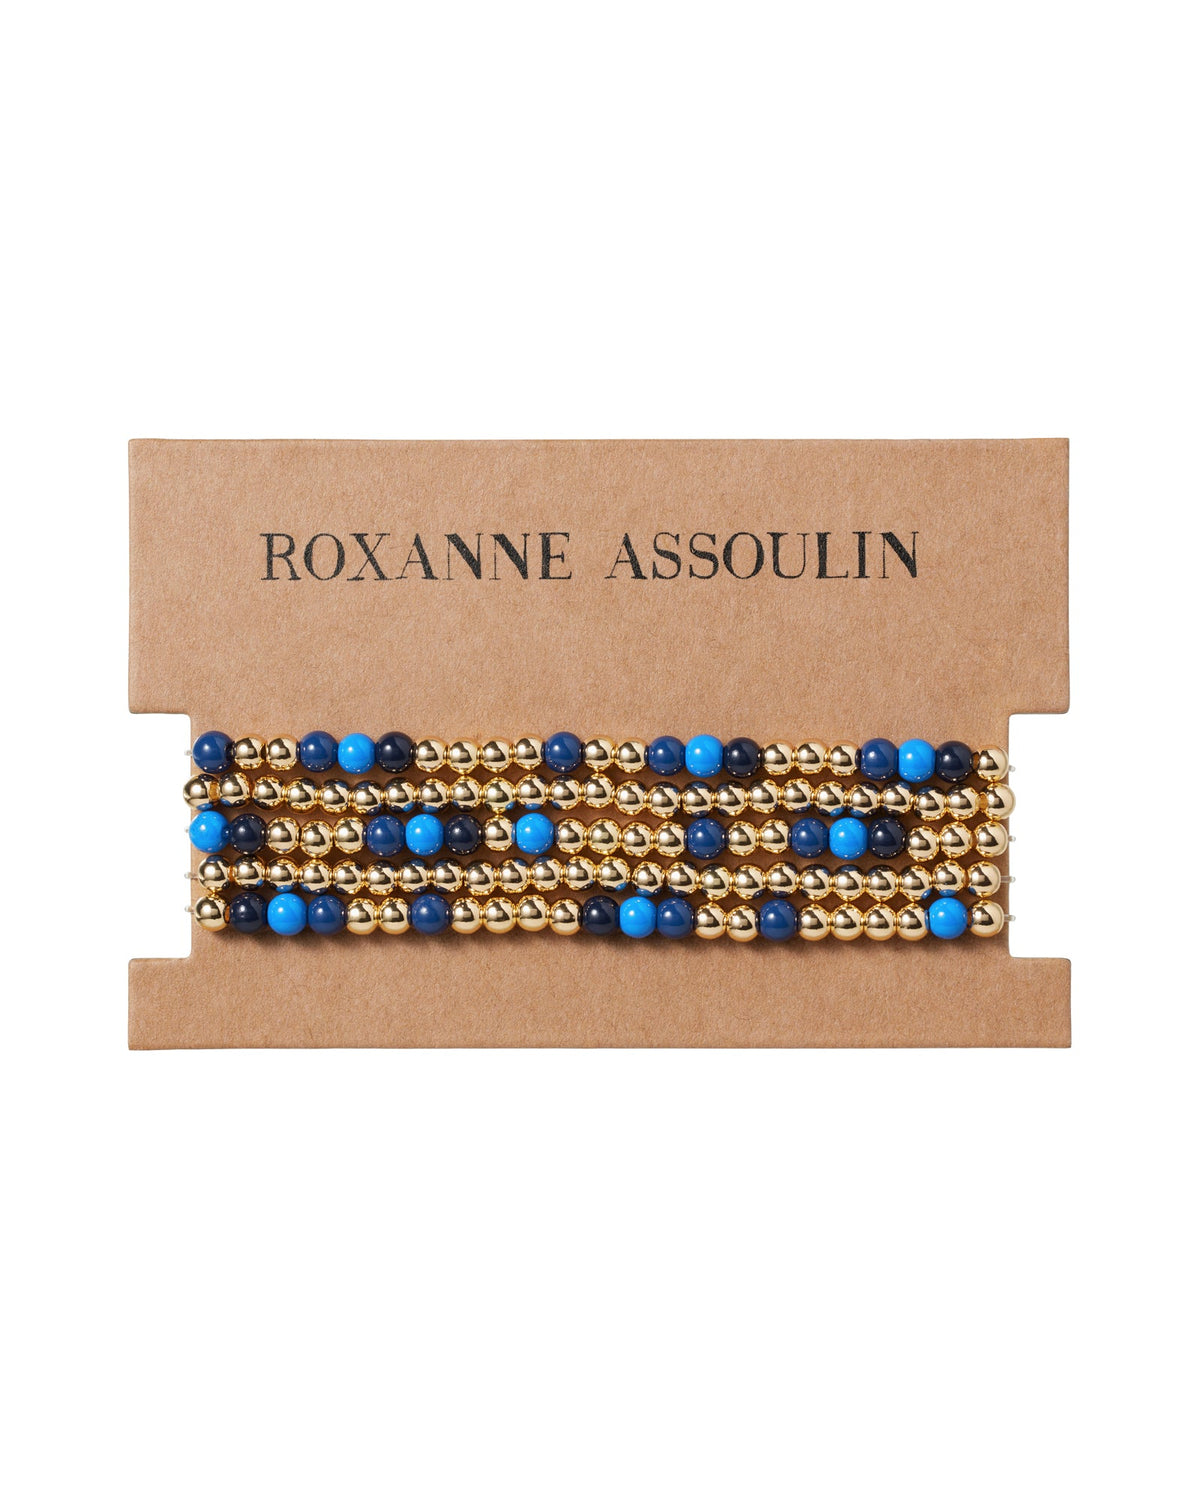 Roxanne Assoulin gold and blue stretch bead bracelets